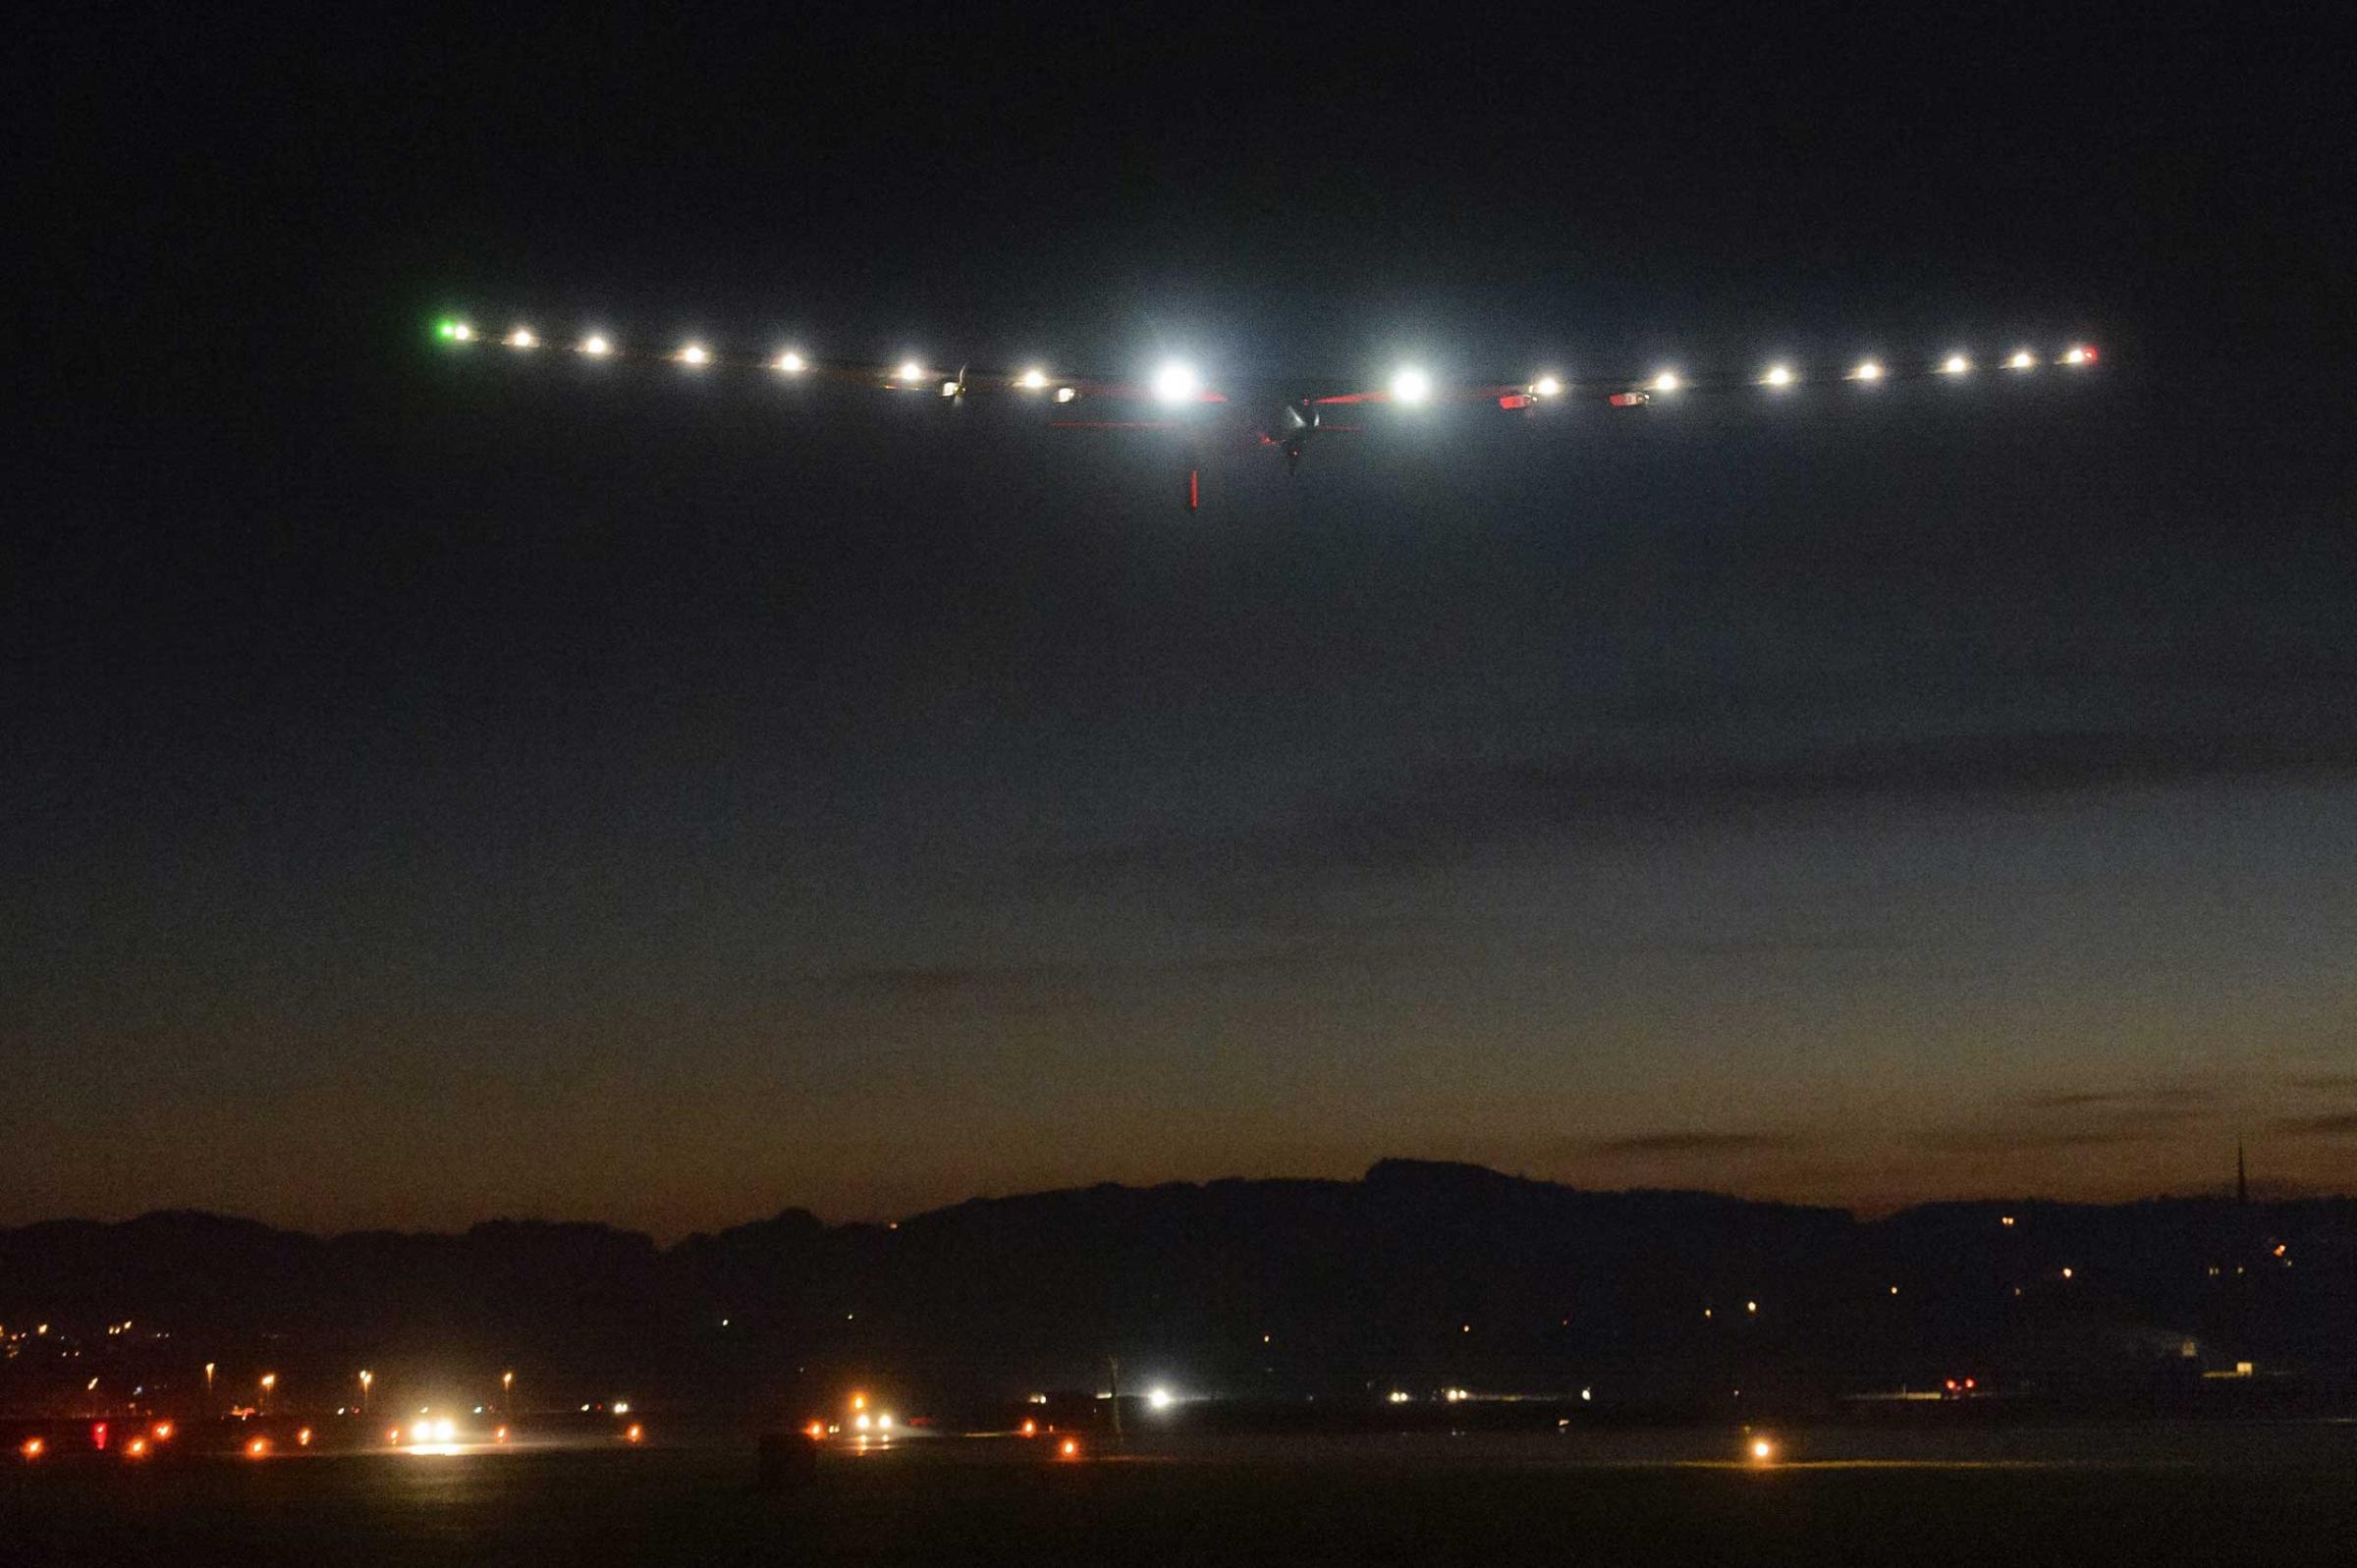 Solar Impulse 2 aircraft flies at night